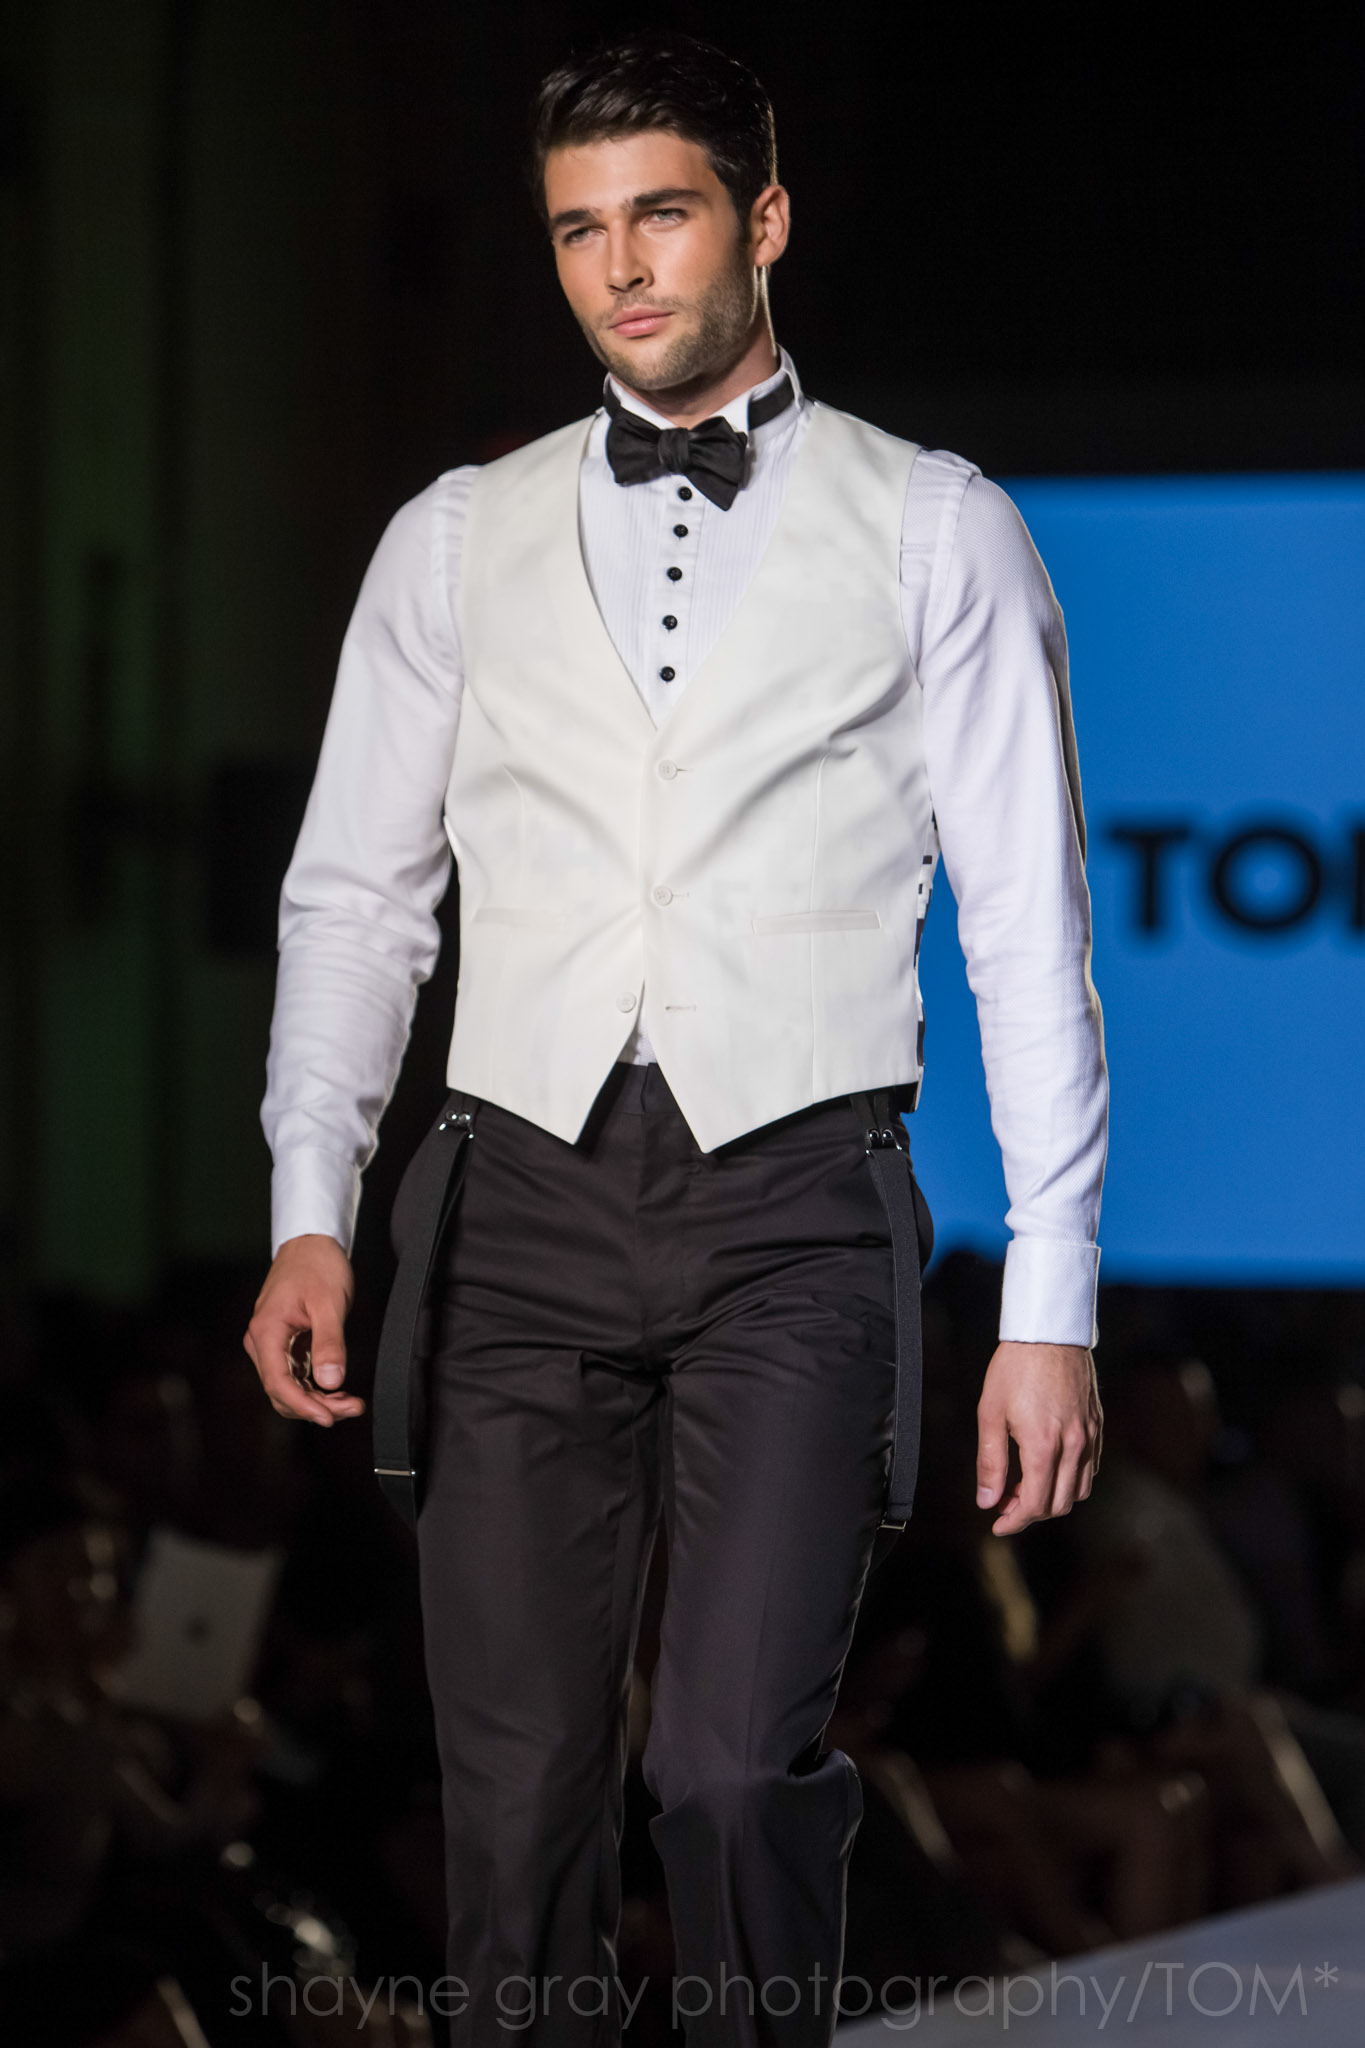 Shayne-Gray-Toronto-men's-fashion_week-TOM-christopher-bates-7282.jpg